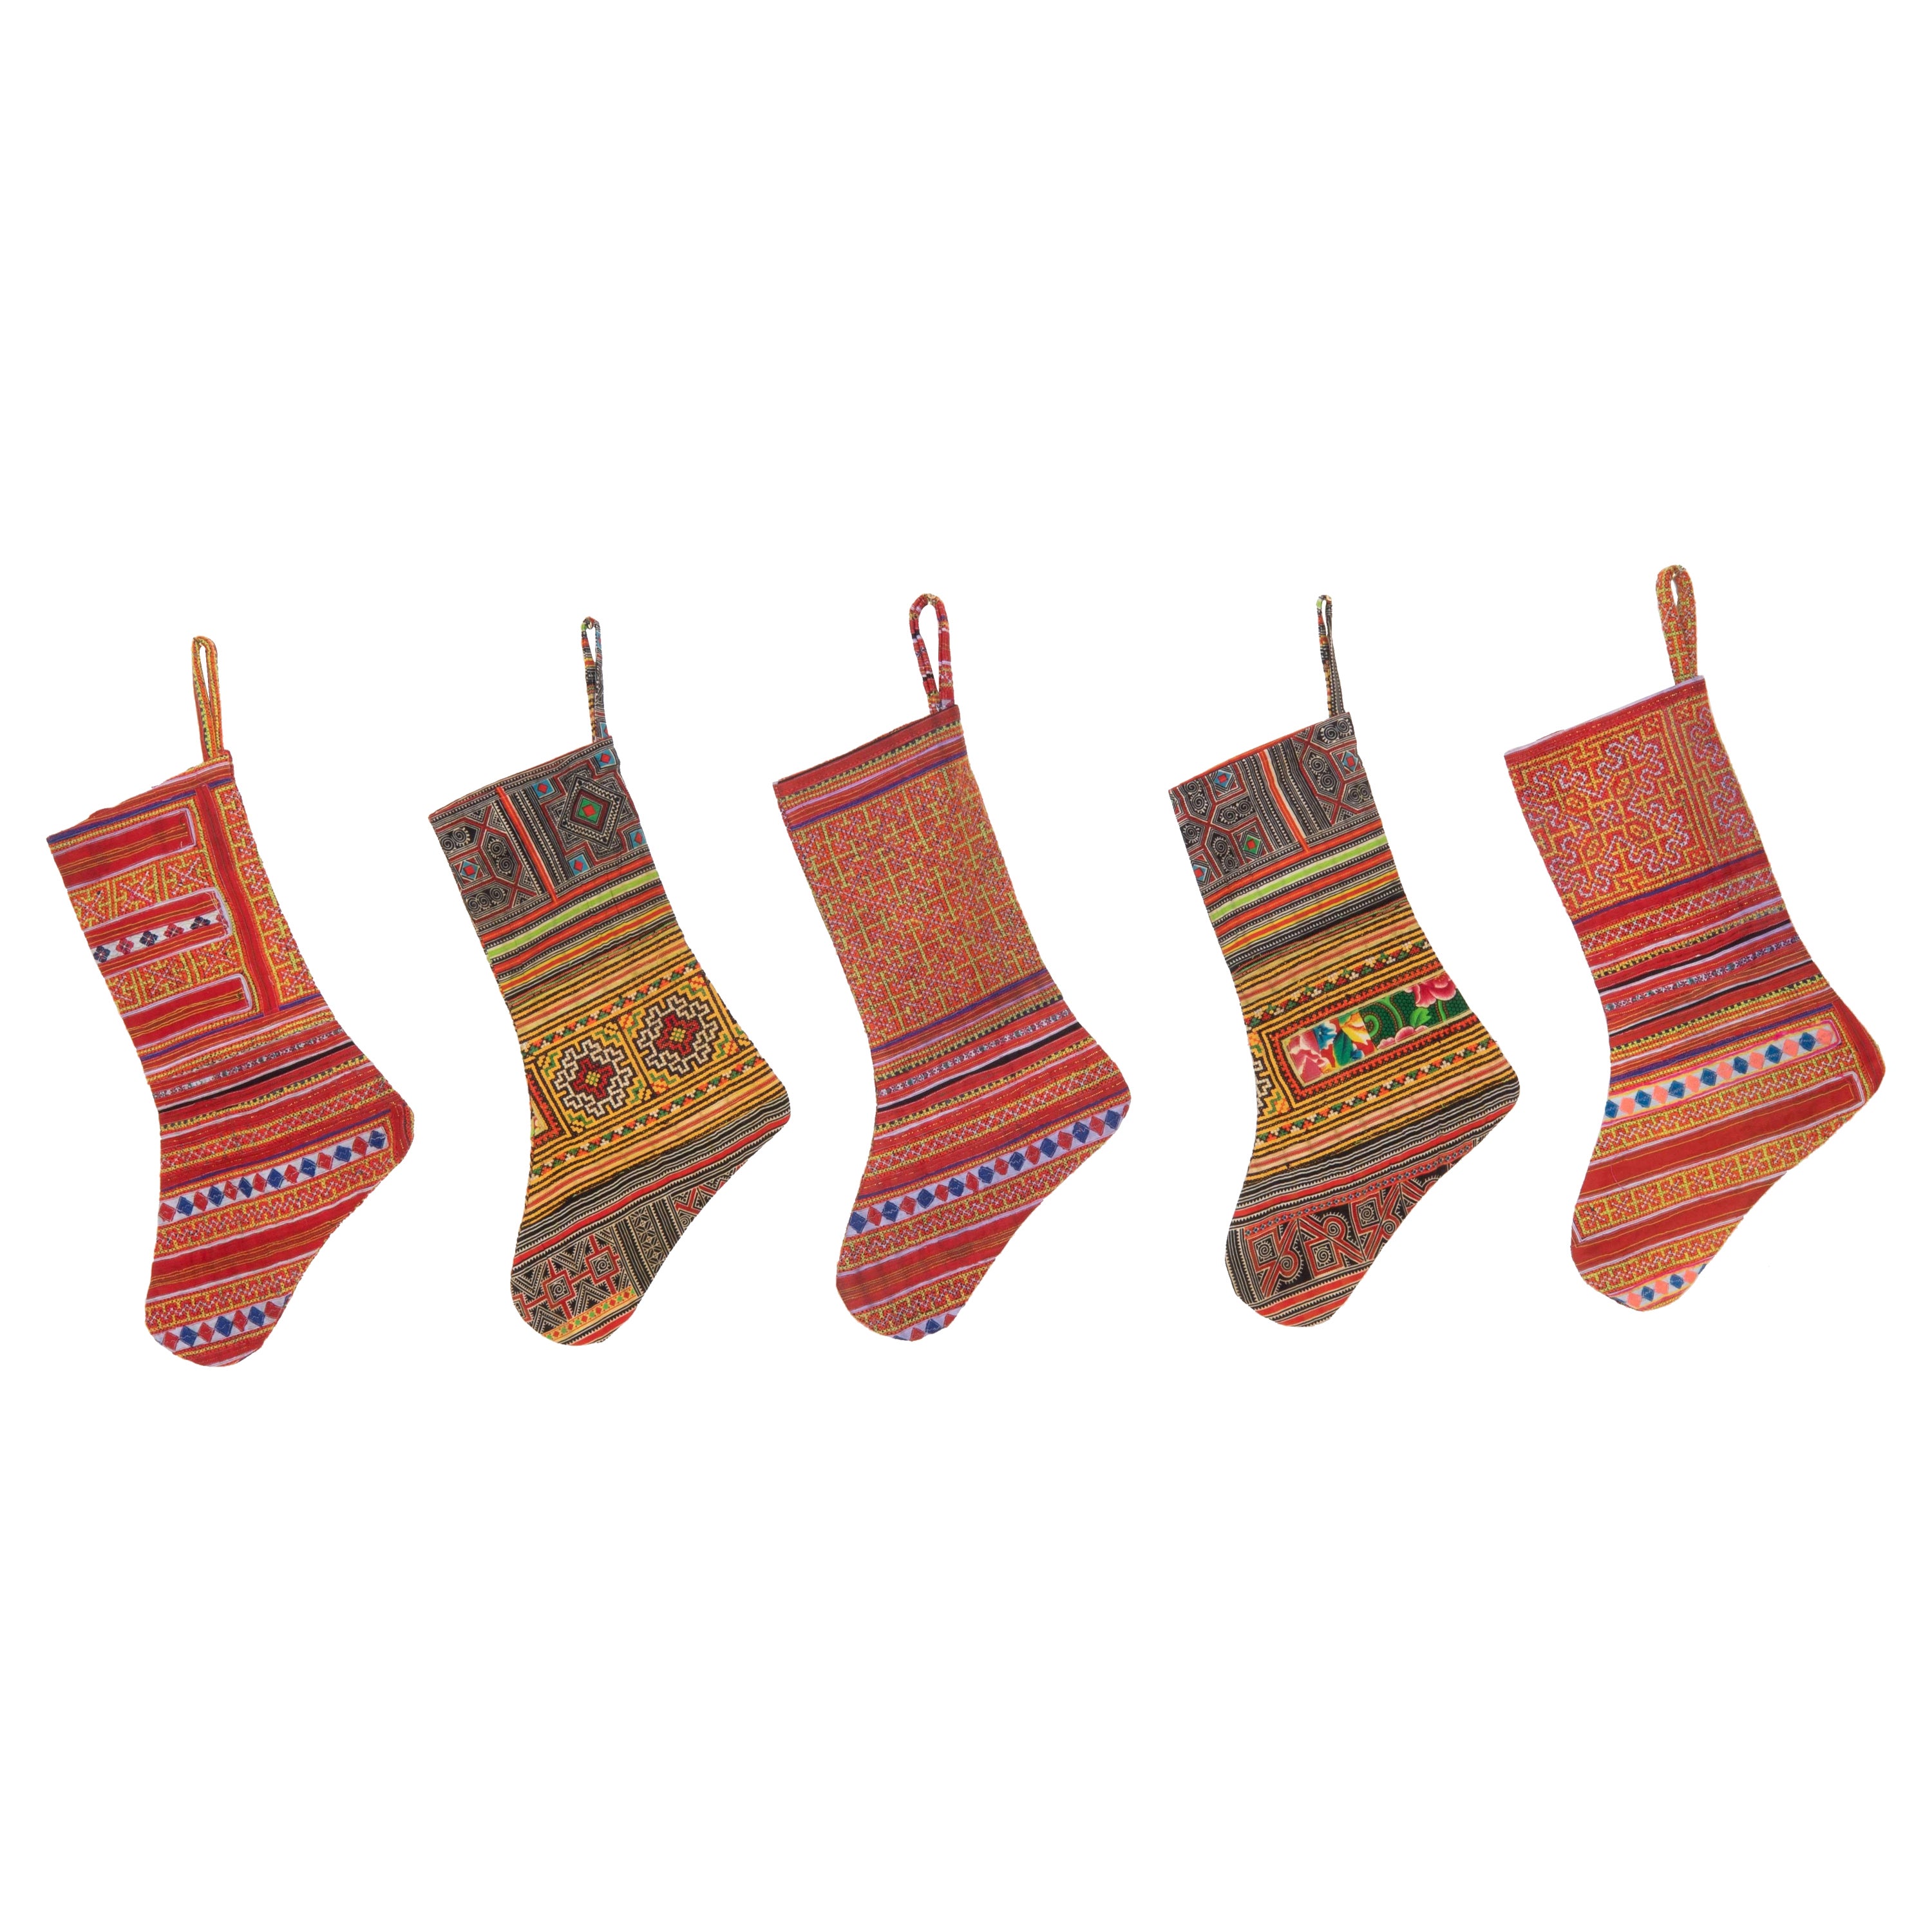 A Set of 5 Hmong Christmas Stockings For Sale